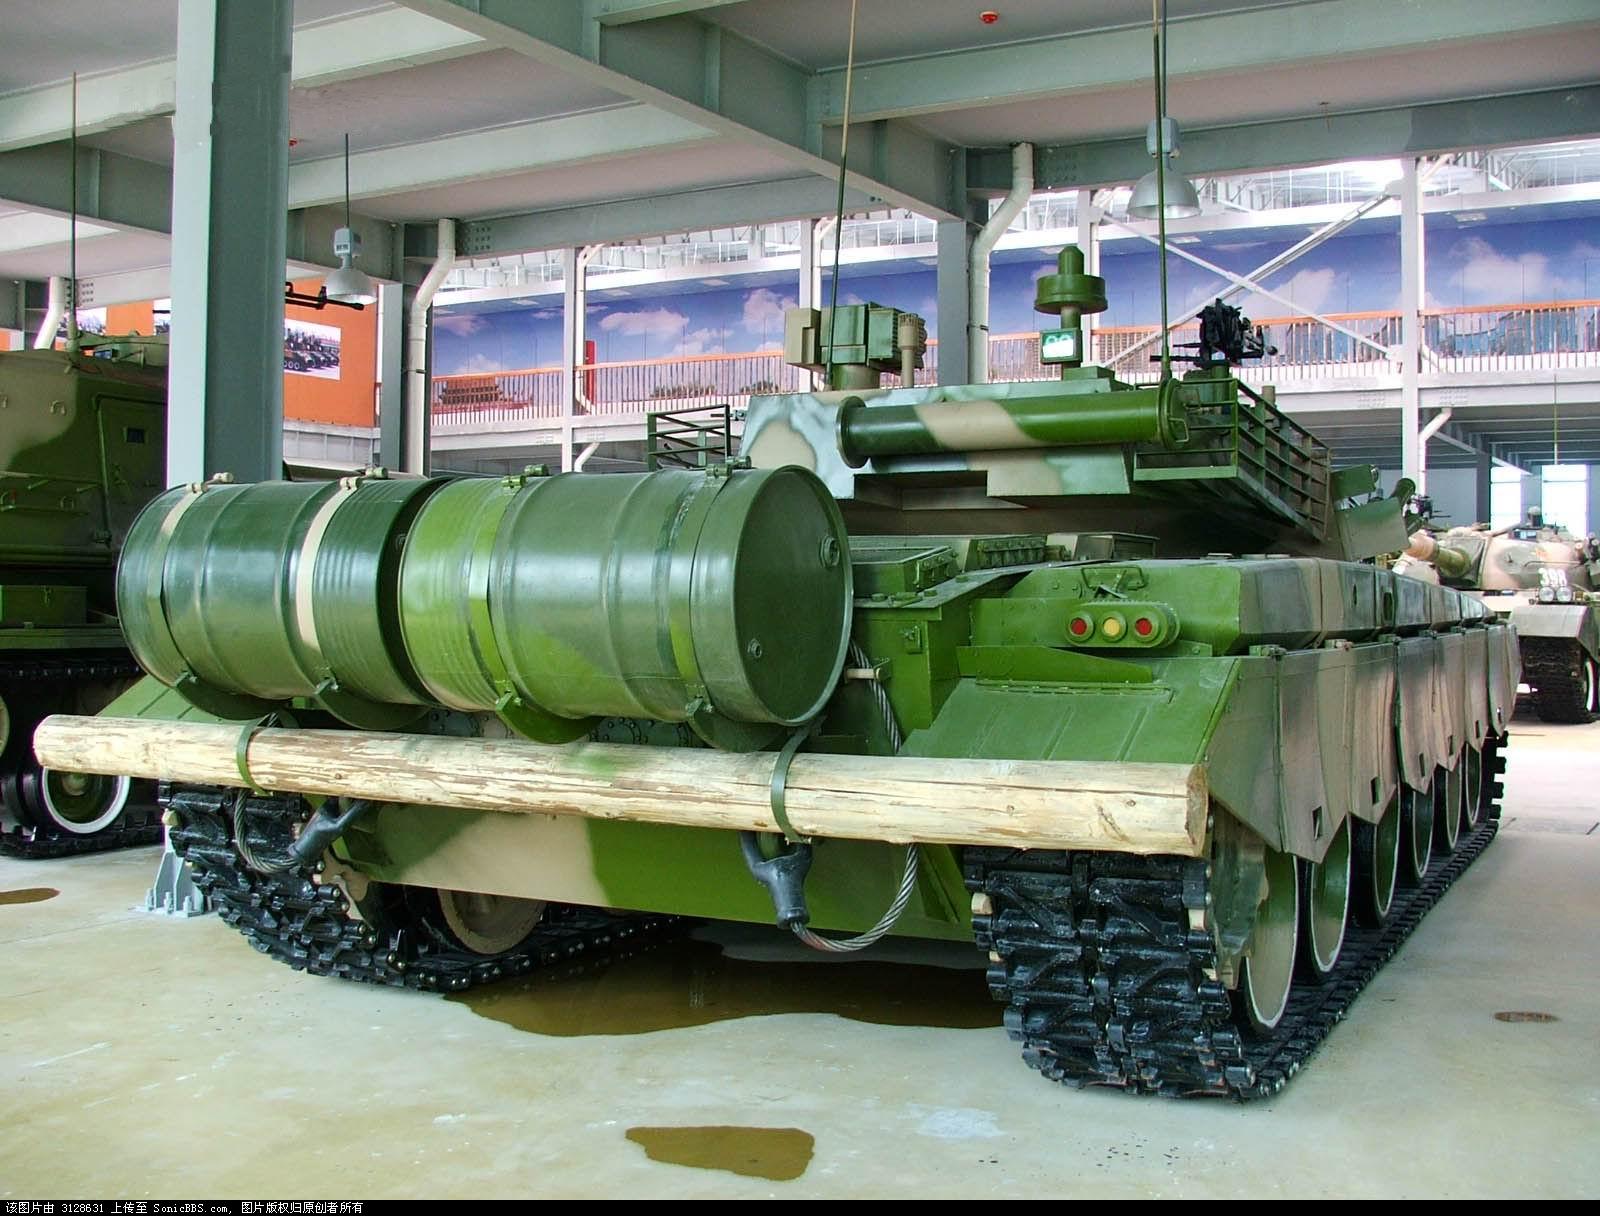 Танк 500 форум. Танк ZTZ-99a. ЗТЗ 99 танк. Type 99 MBT. Китайский танк Тип 99.